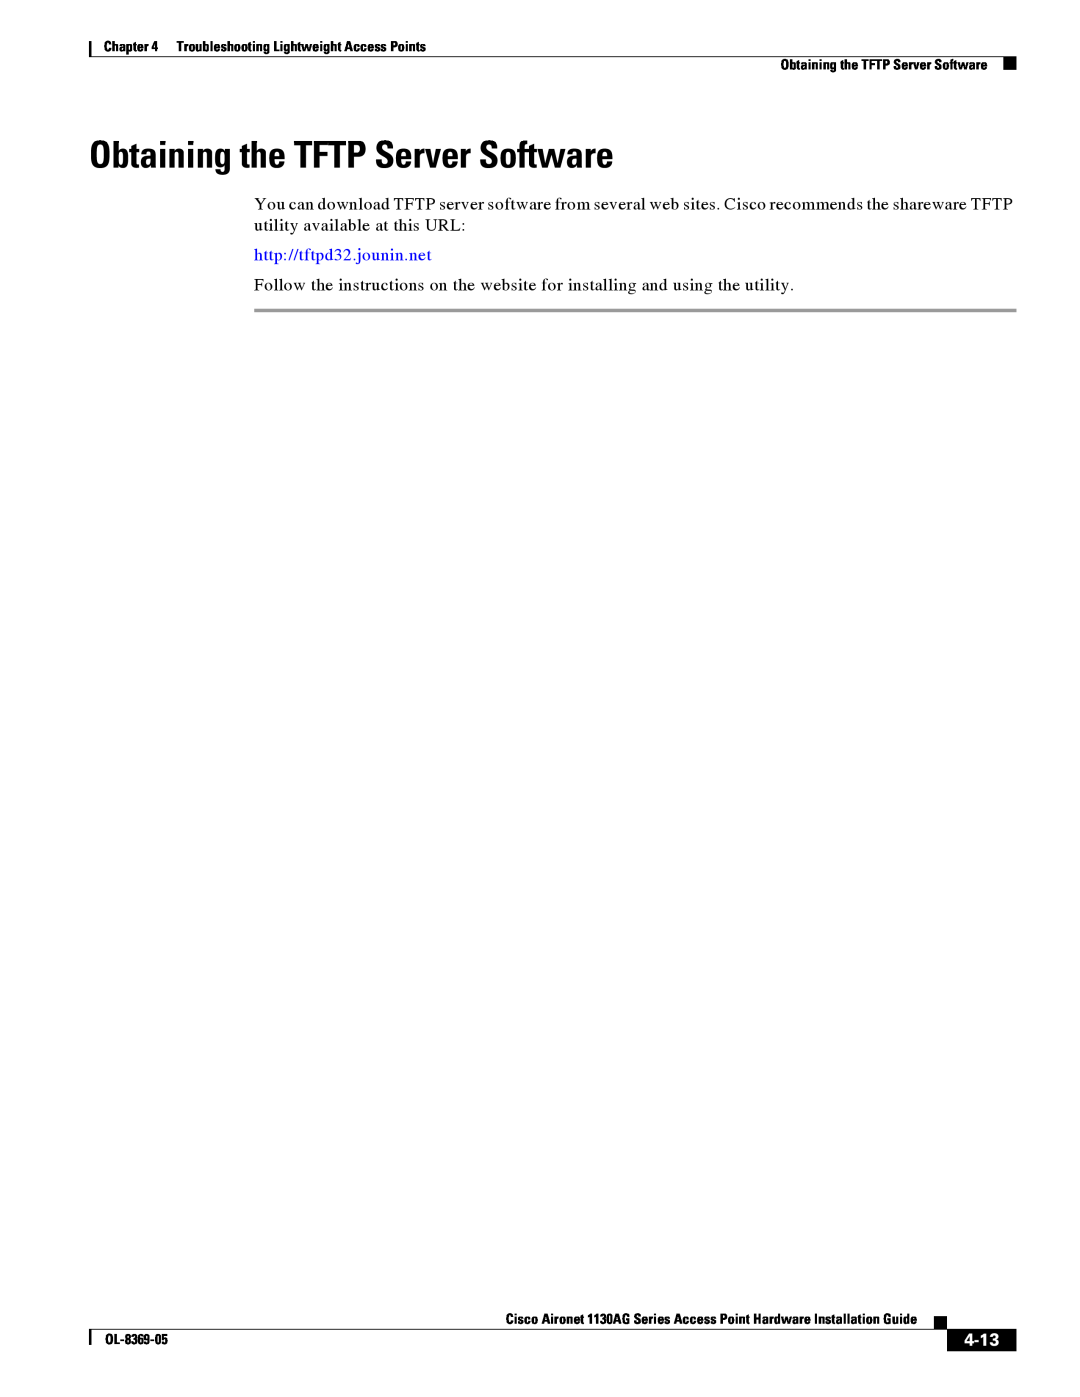 Cisco Systems 1130AG manual Obtaining the TFTP Server Software, http//tftpd32.jounin.net, 4-13 